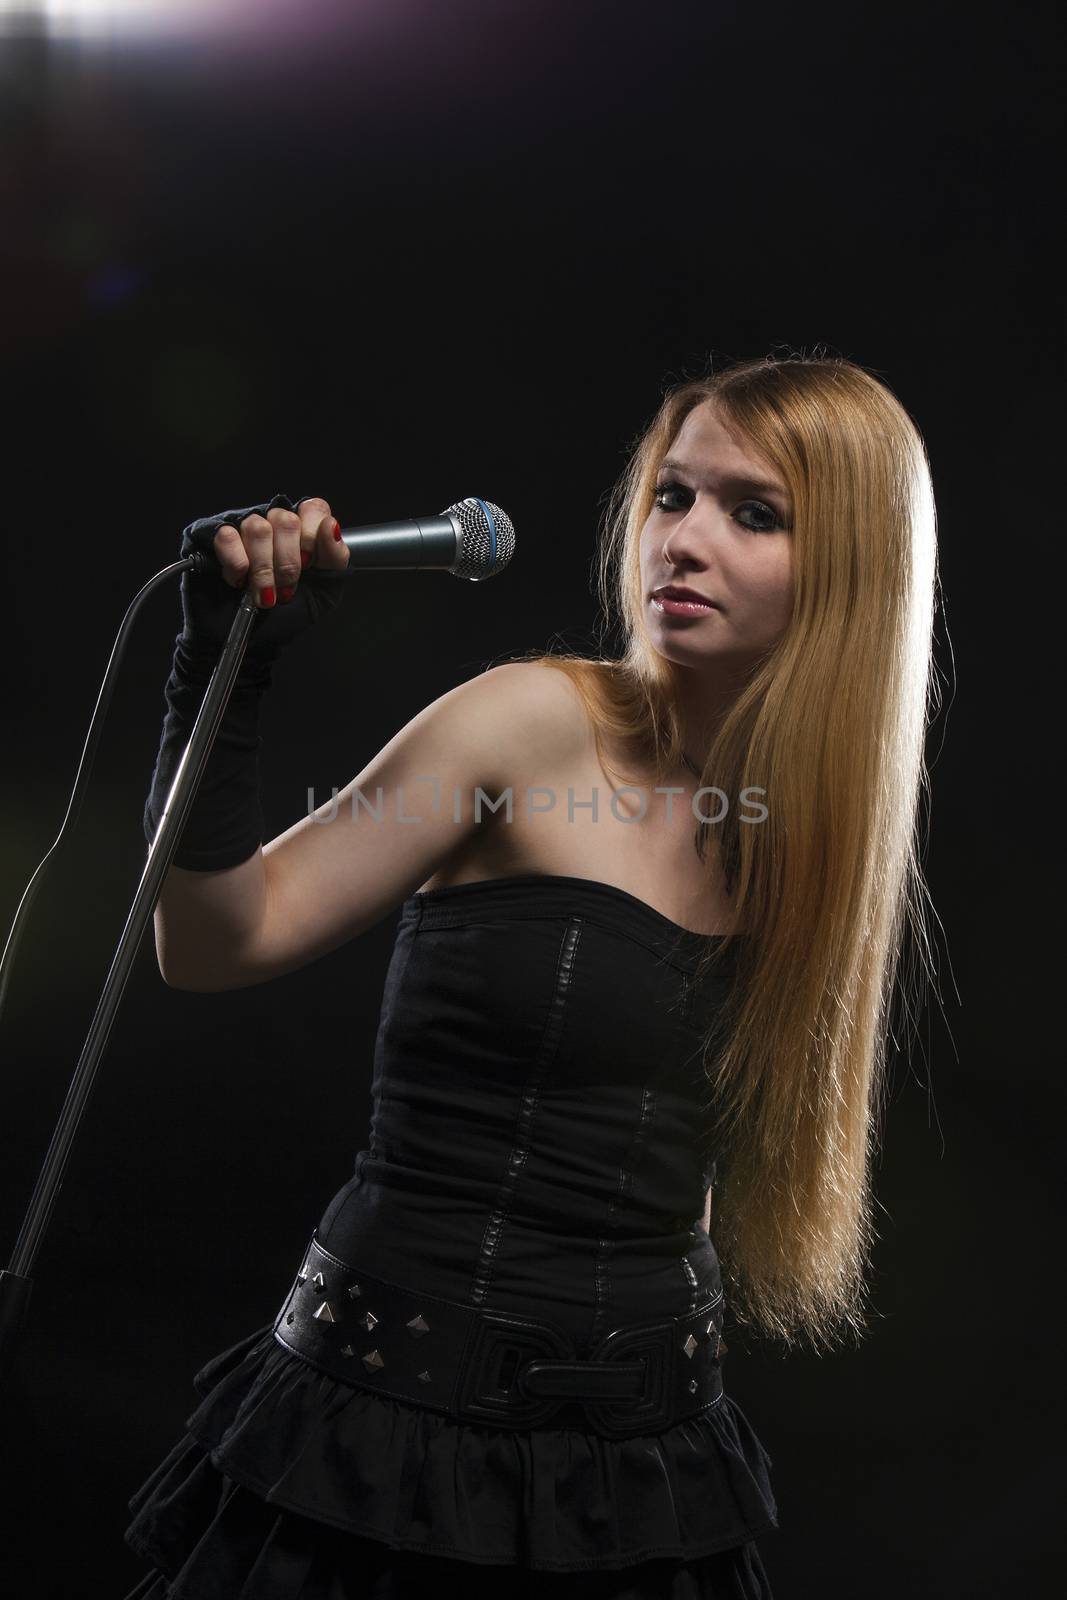 Portrait Of Female Singer Singing In Microphone